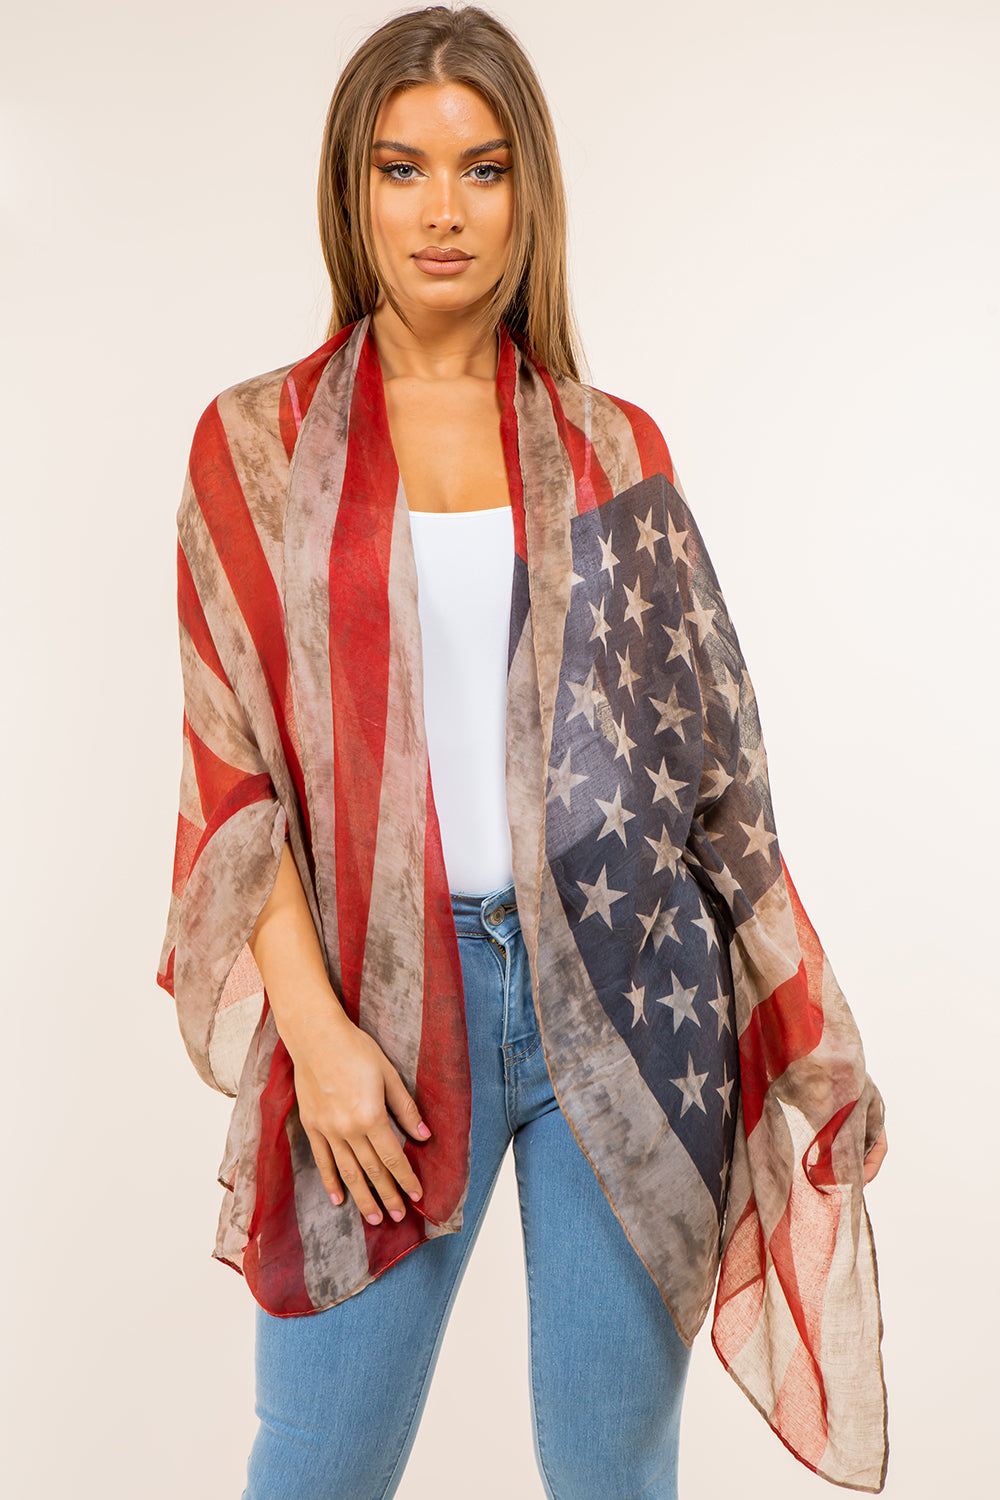 GPO-4134 vintage americana design scarf